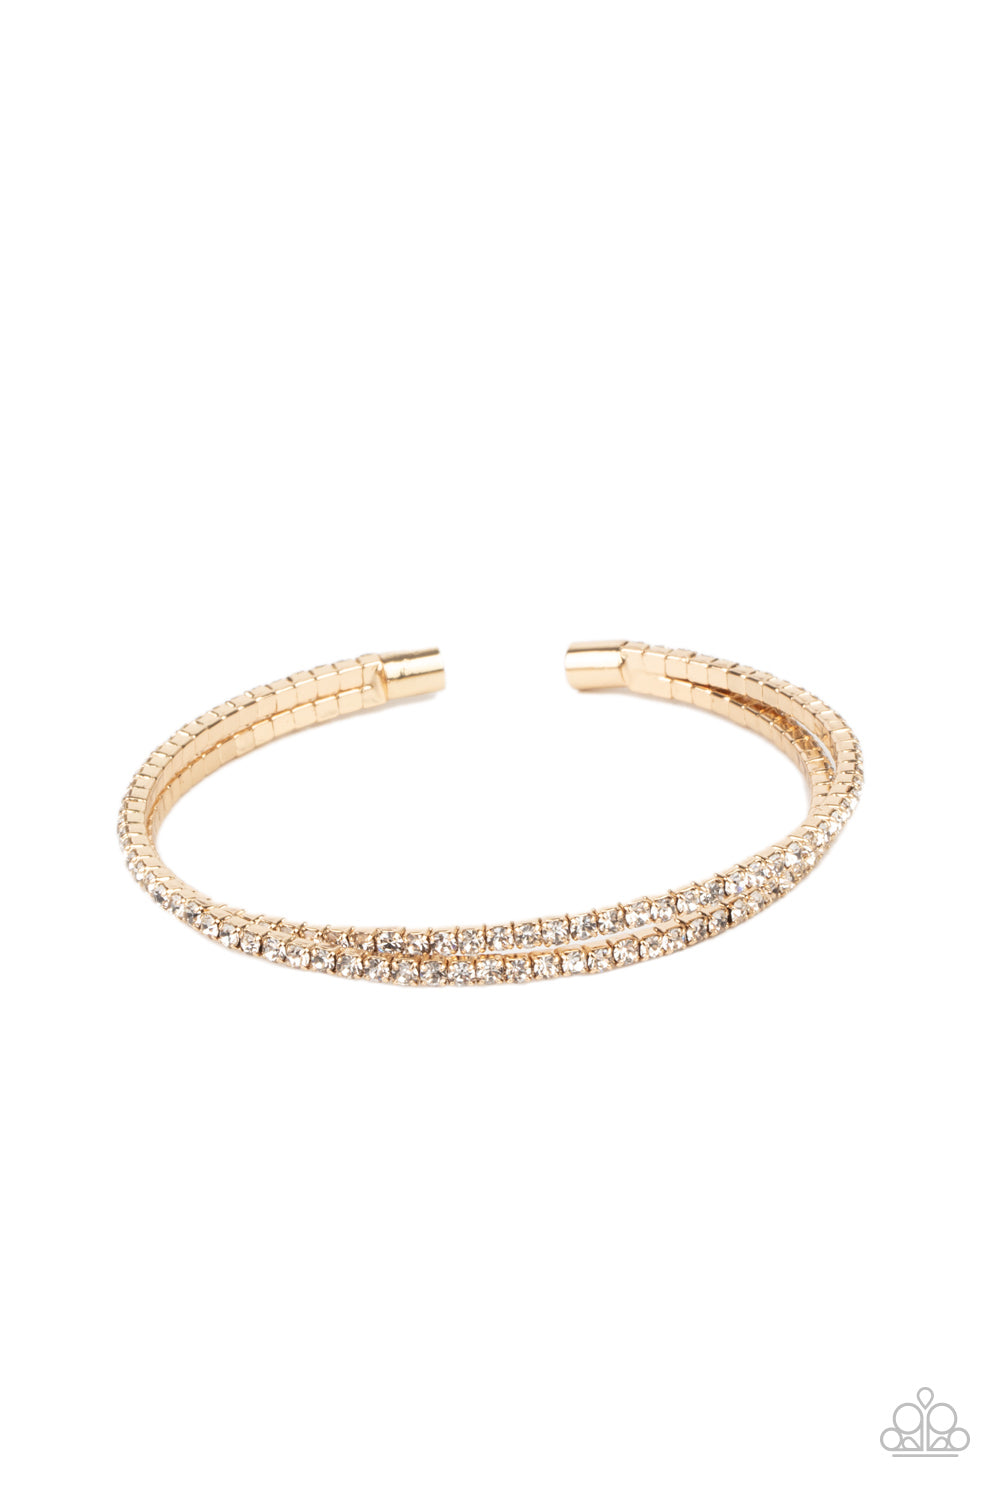 Iridescently Intertwined Gold-Bracelet